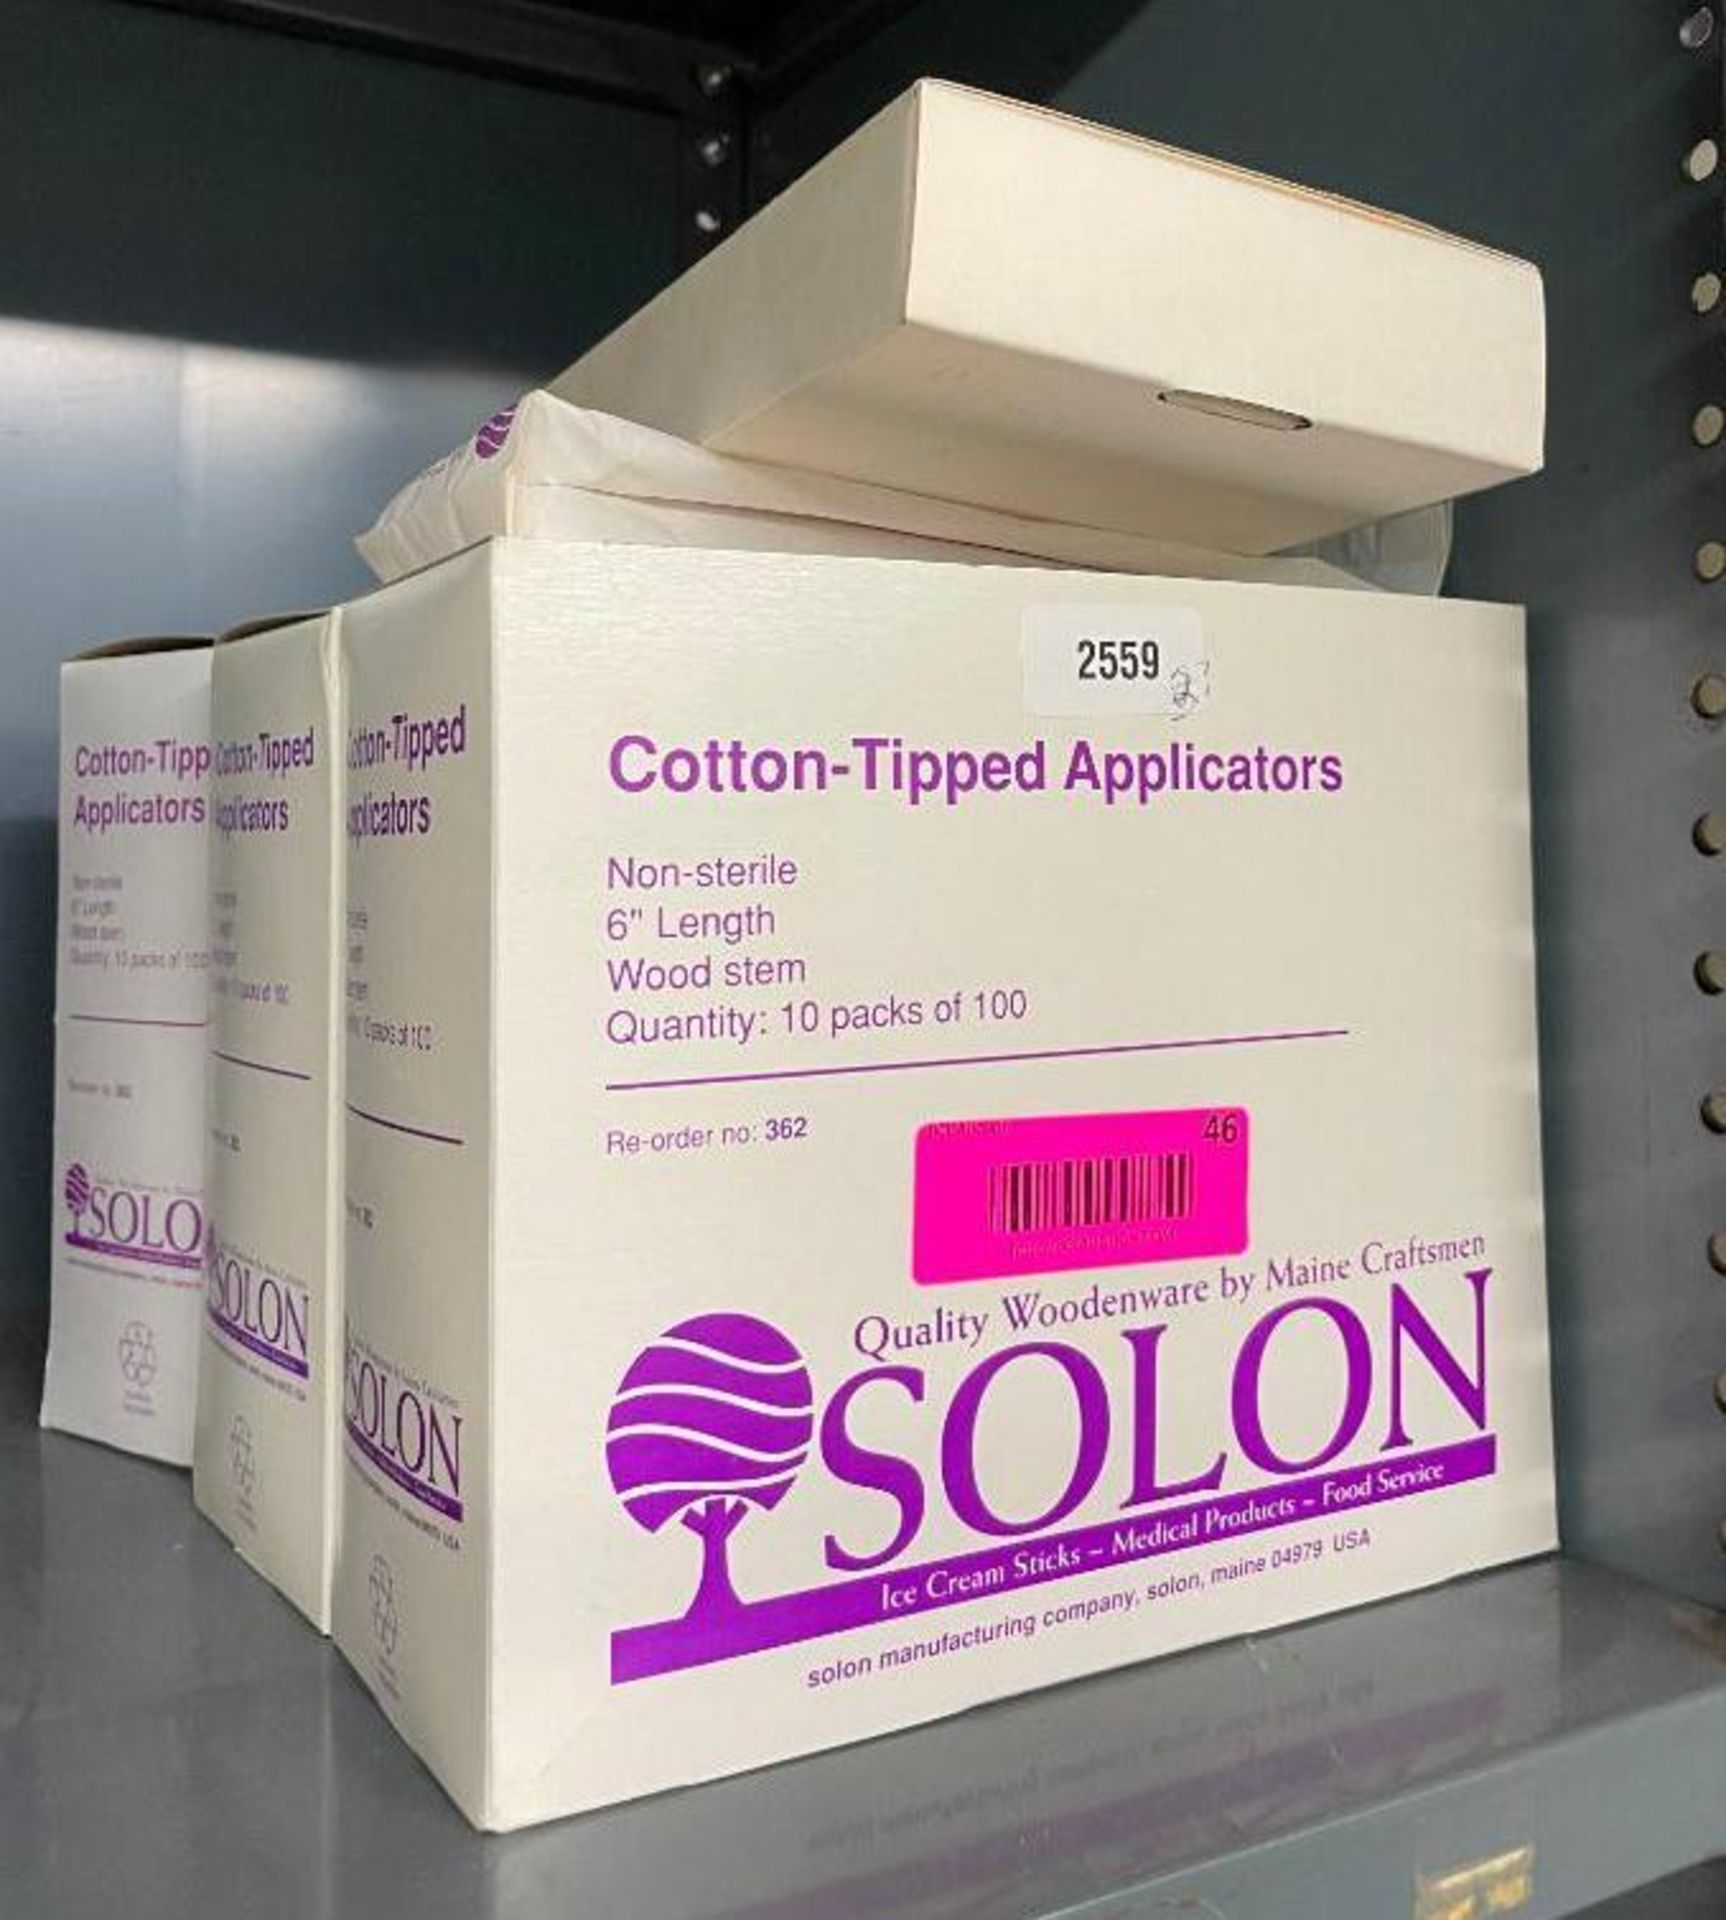 STERILE COTTON-TIPPED APPLICATORS BRAND/MODEL: SOLON QTY: 1